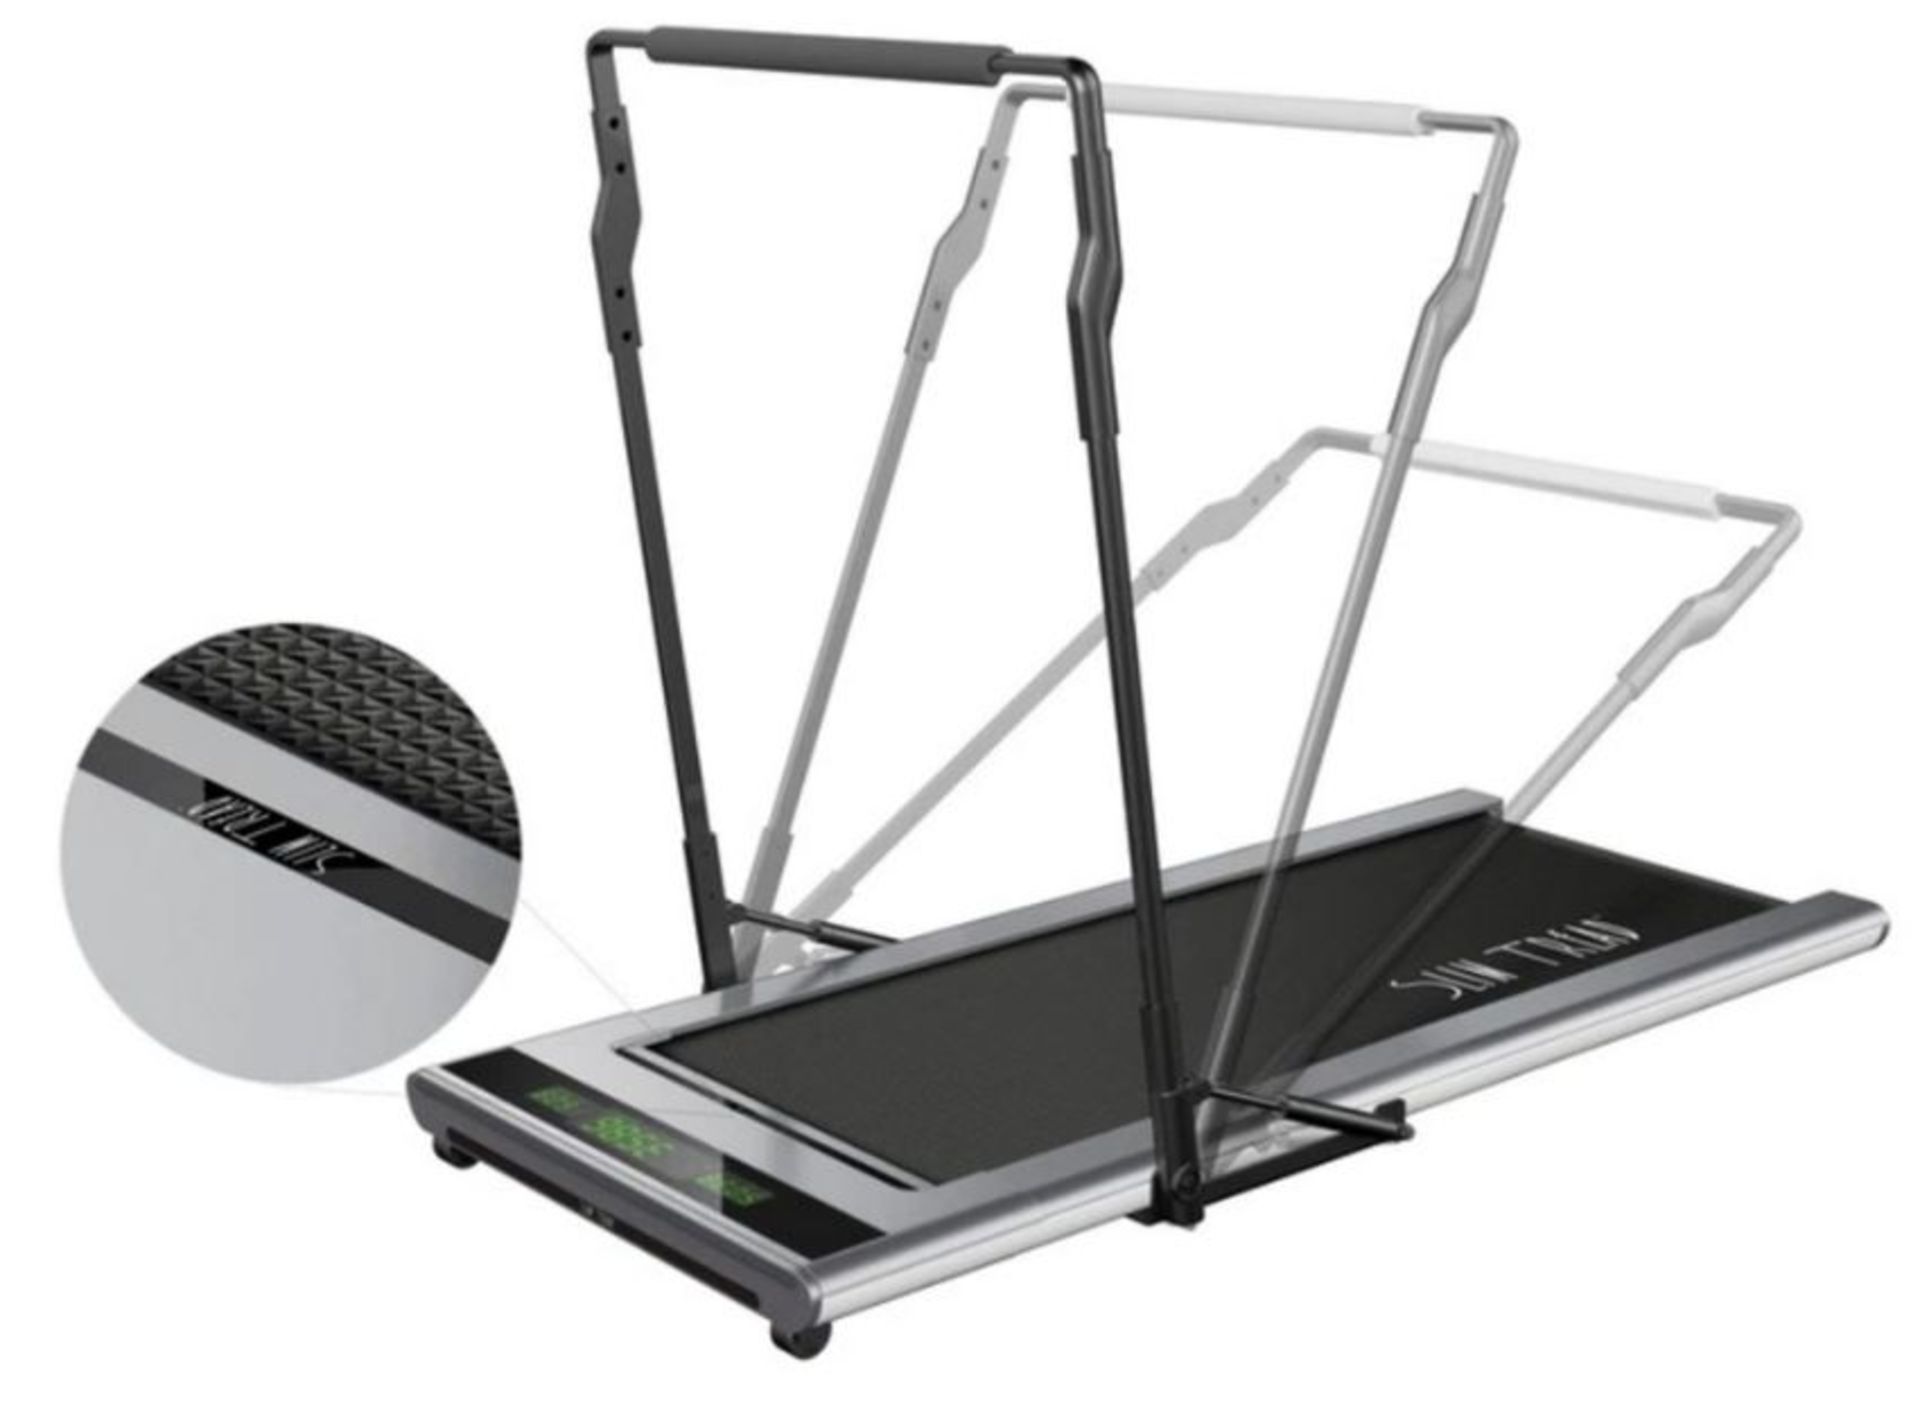 Resale Job Lot - 10 x Slim Tread Ultra Thin Smart Treadmill Running / Walking Machines - Lightweight - Image 5 of 10